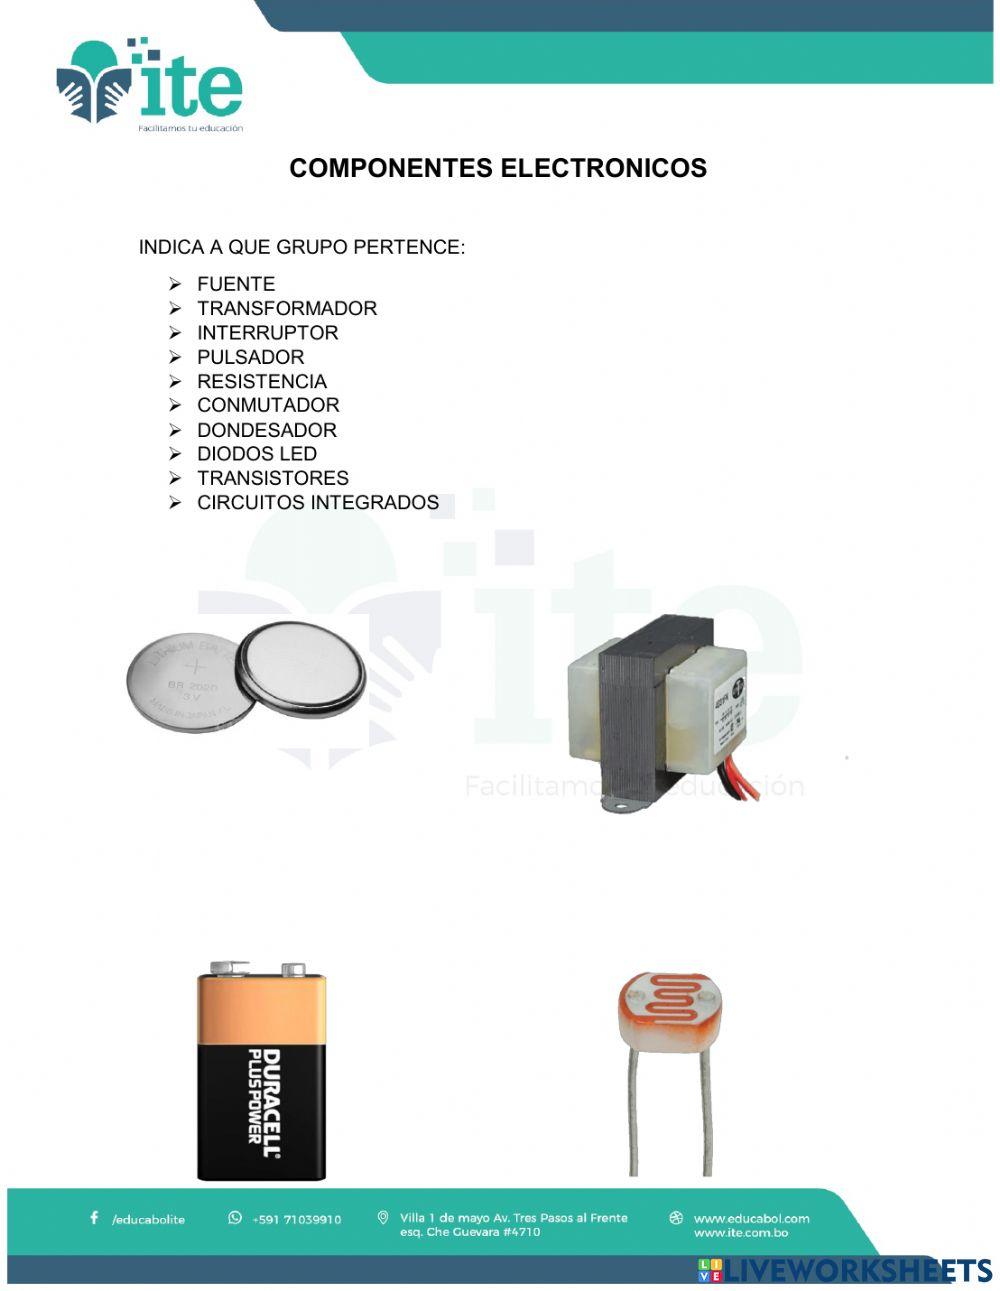 Componentes electronicos activity